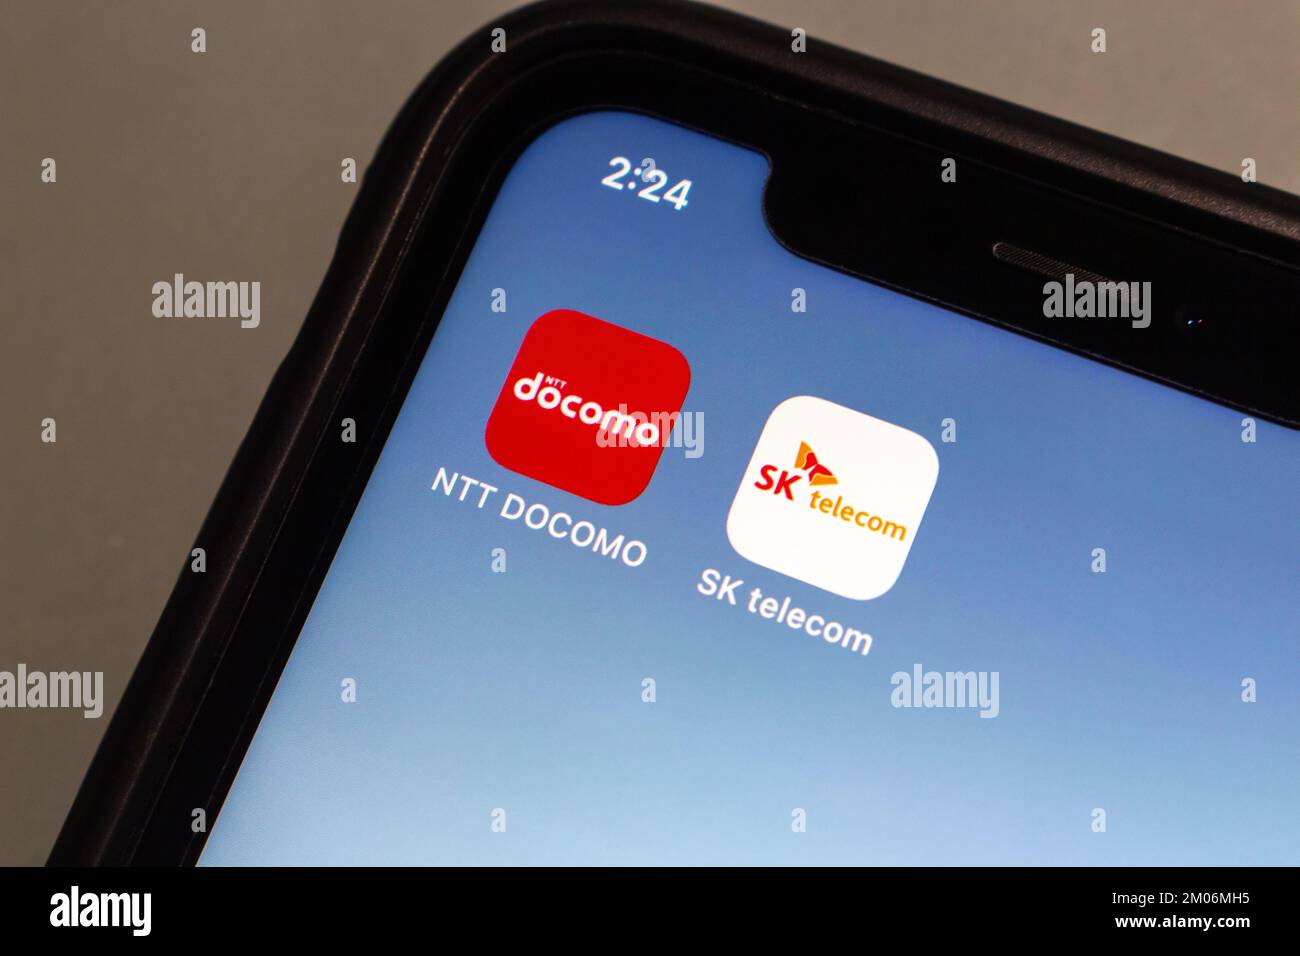 Vancouver, CANADA - Dec 3 2022 : Conceptual image NTT Docomo and SK telecom icons seen in iPhone screen. Stock Photo